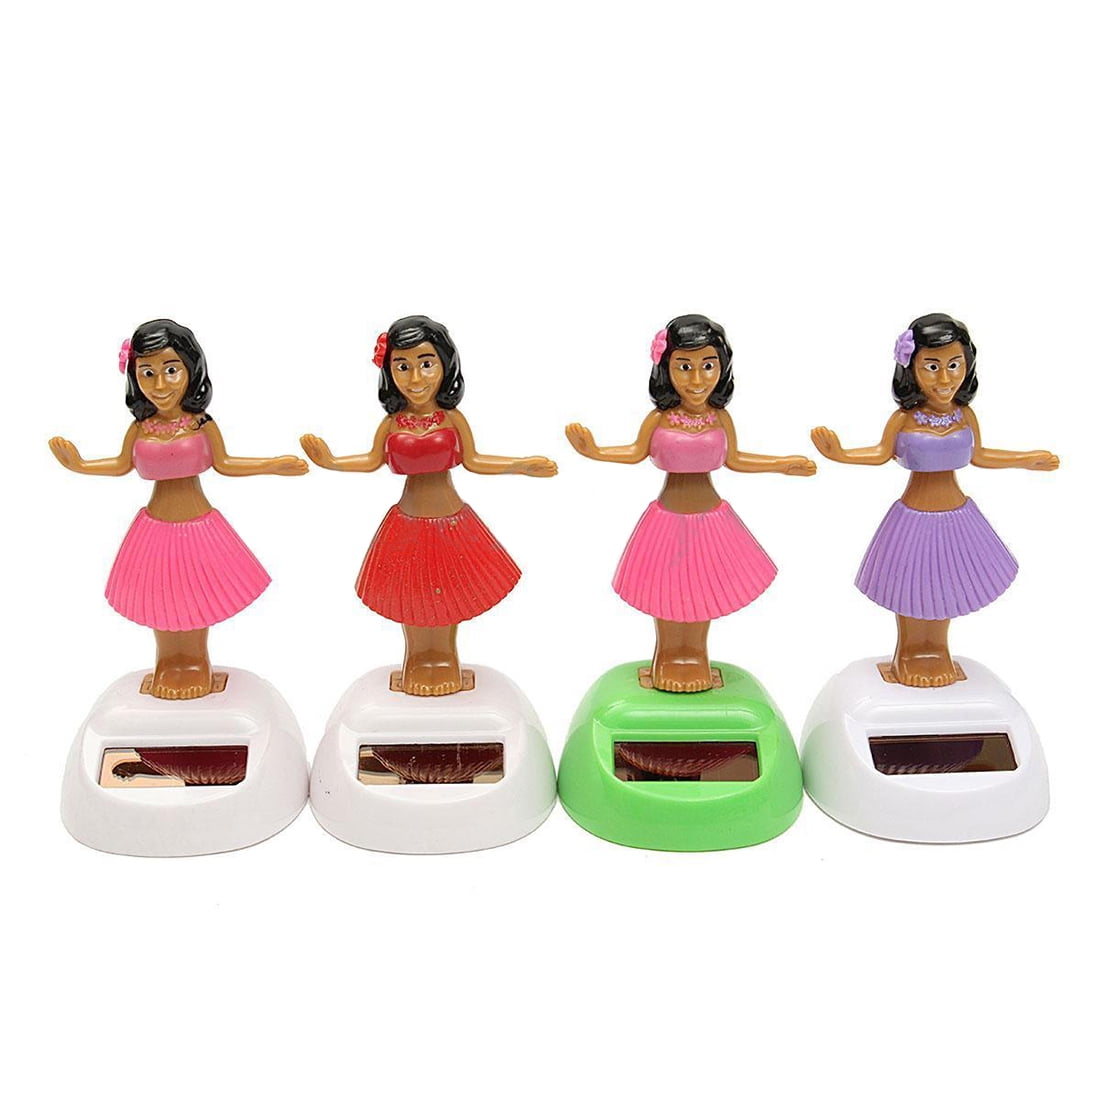 Plastic Solar-powered Dancing Hula Girls 4 Different Colors 